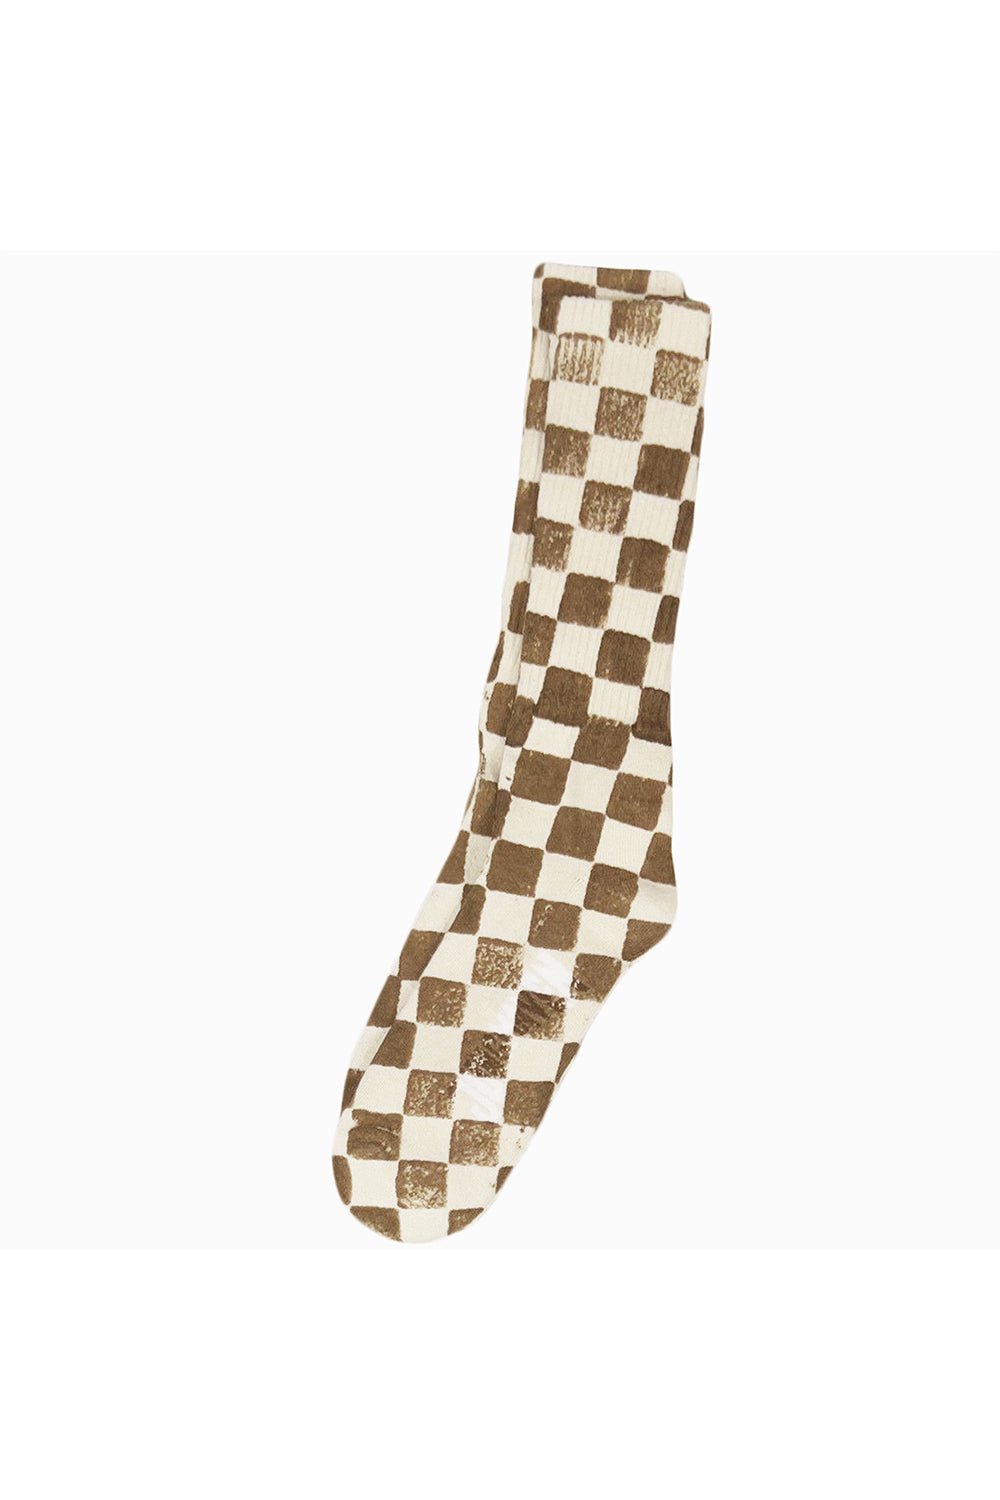 Checkerboard Socks | Jungmaven Hemp Clothing & Accessories